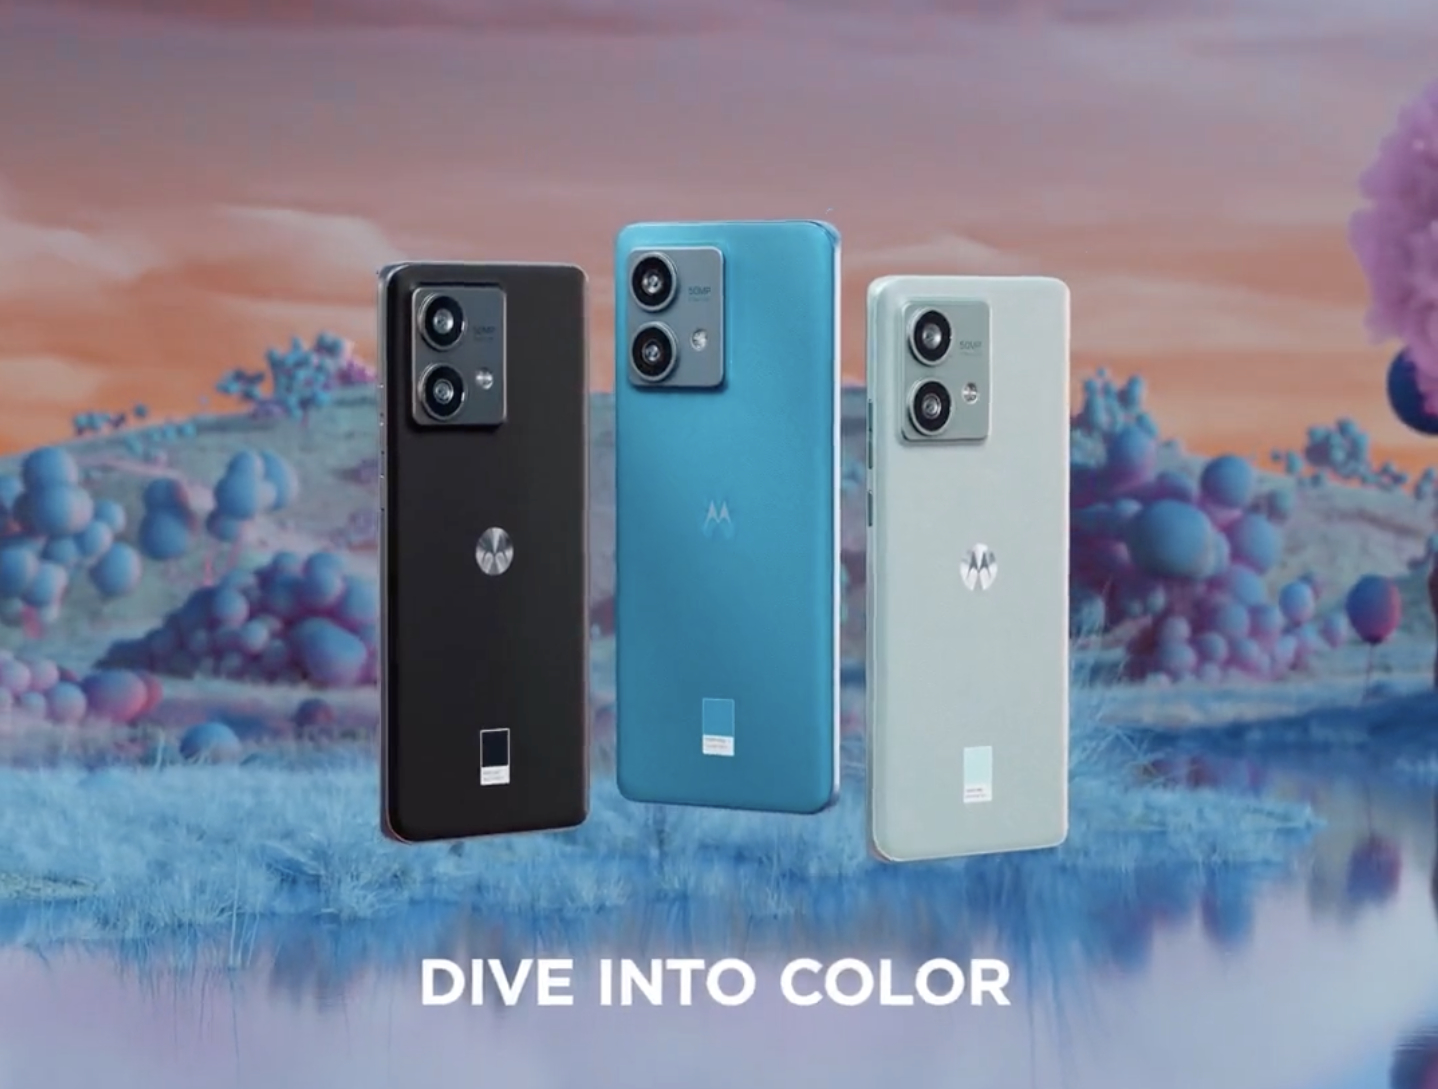 Motorola Edge 40 Neo leaked specs and renders show off three colorways